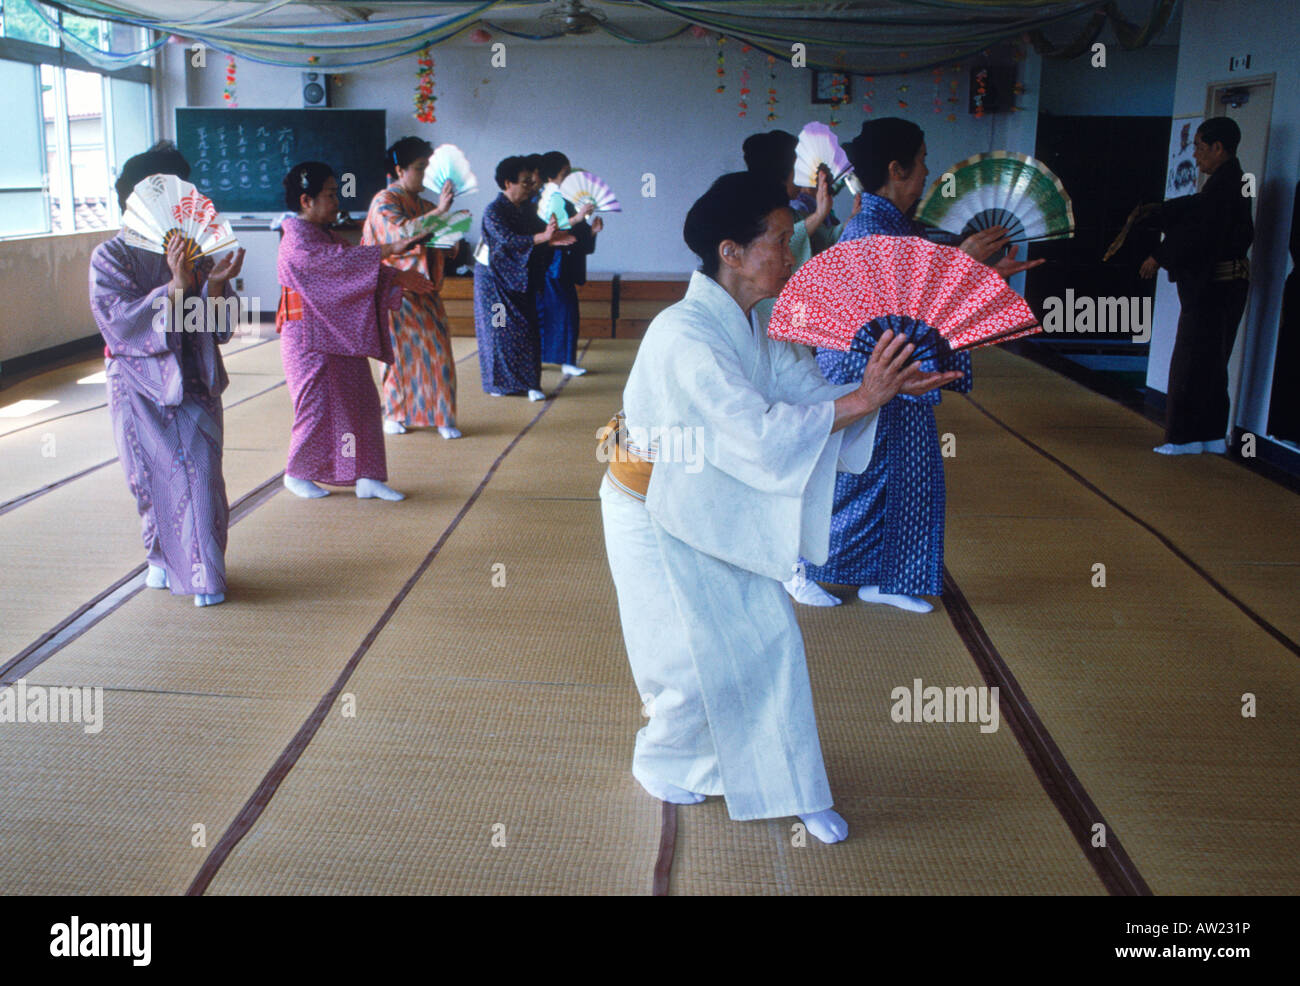 Elderly Japanese women learning the ancient art of fan dancing in classroom Stock Photo